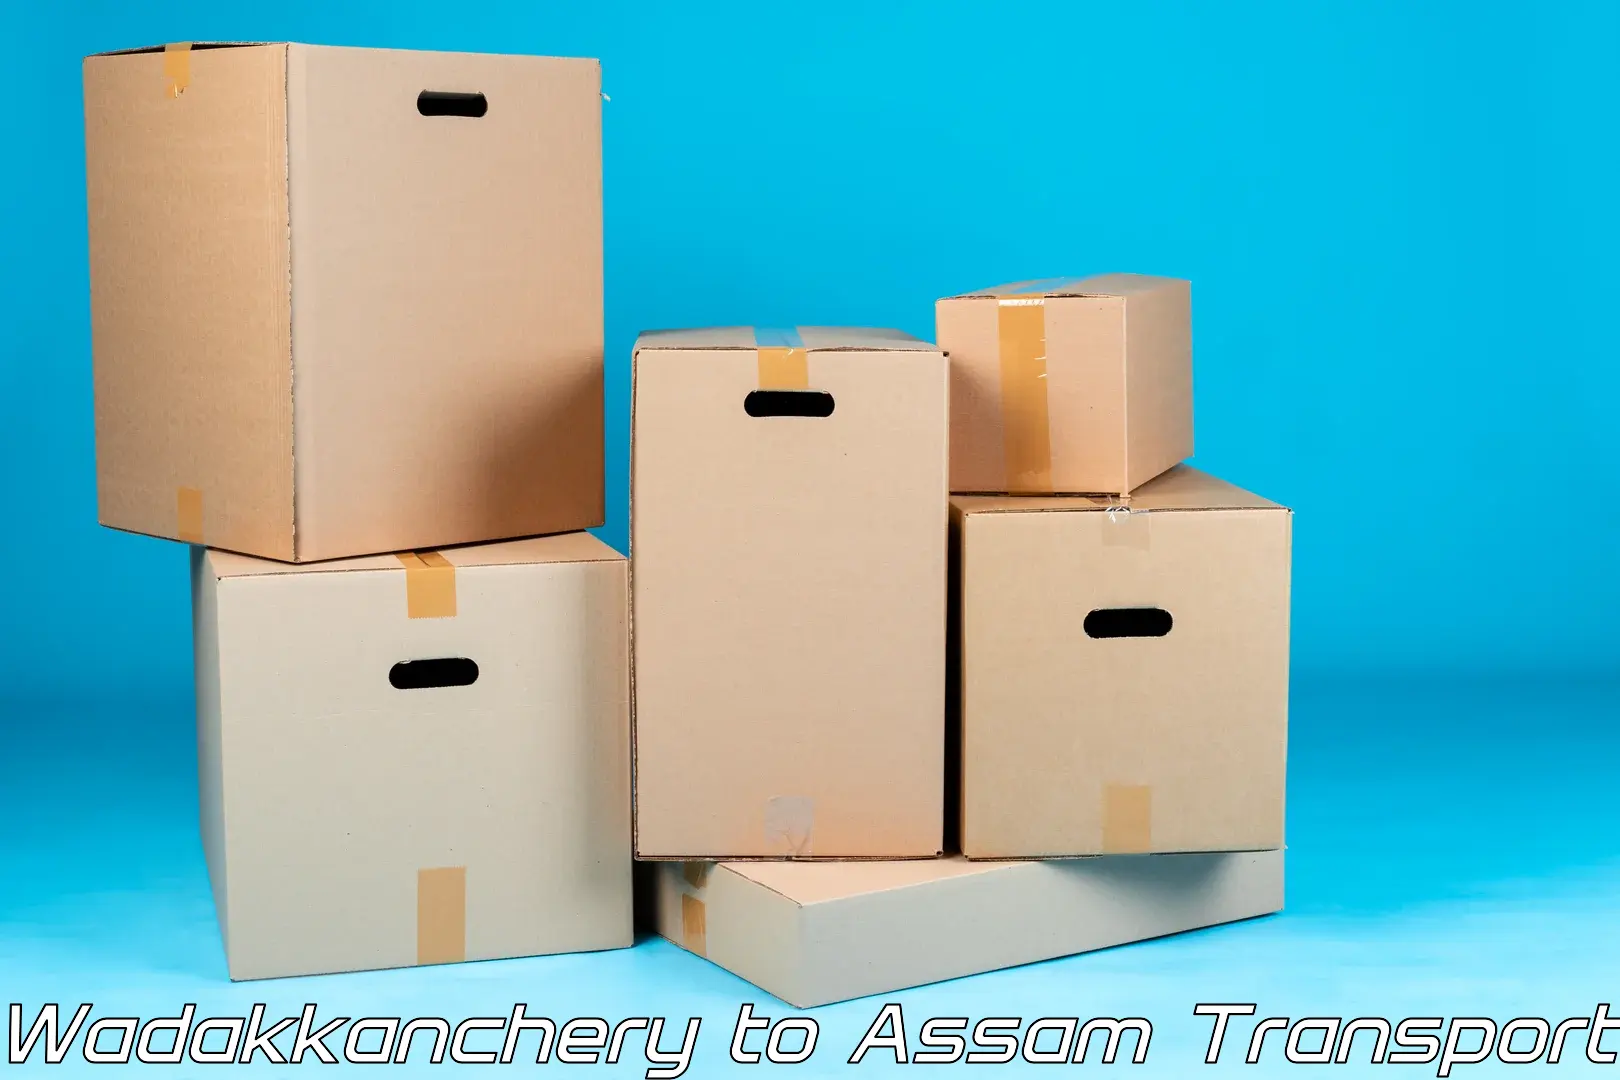 Shipping partner Wadakkanchery to Assam